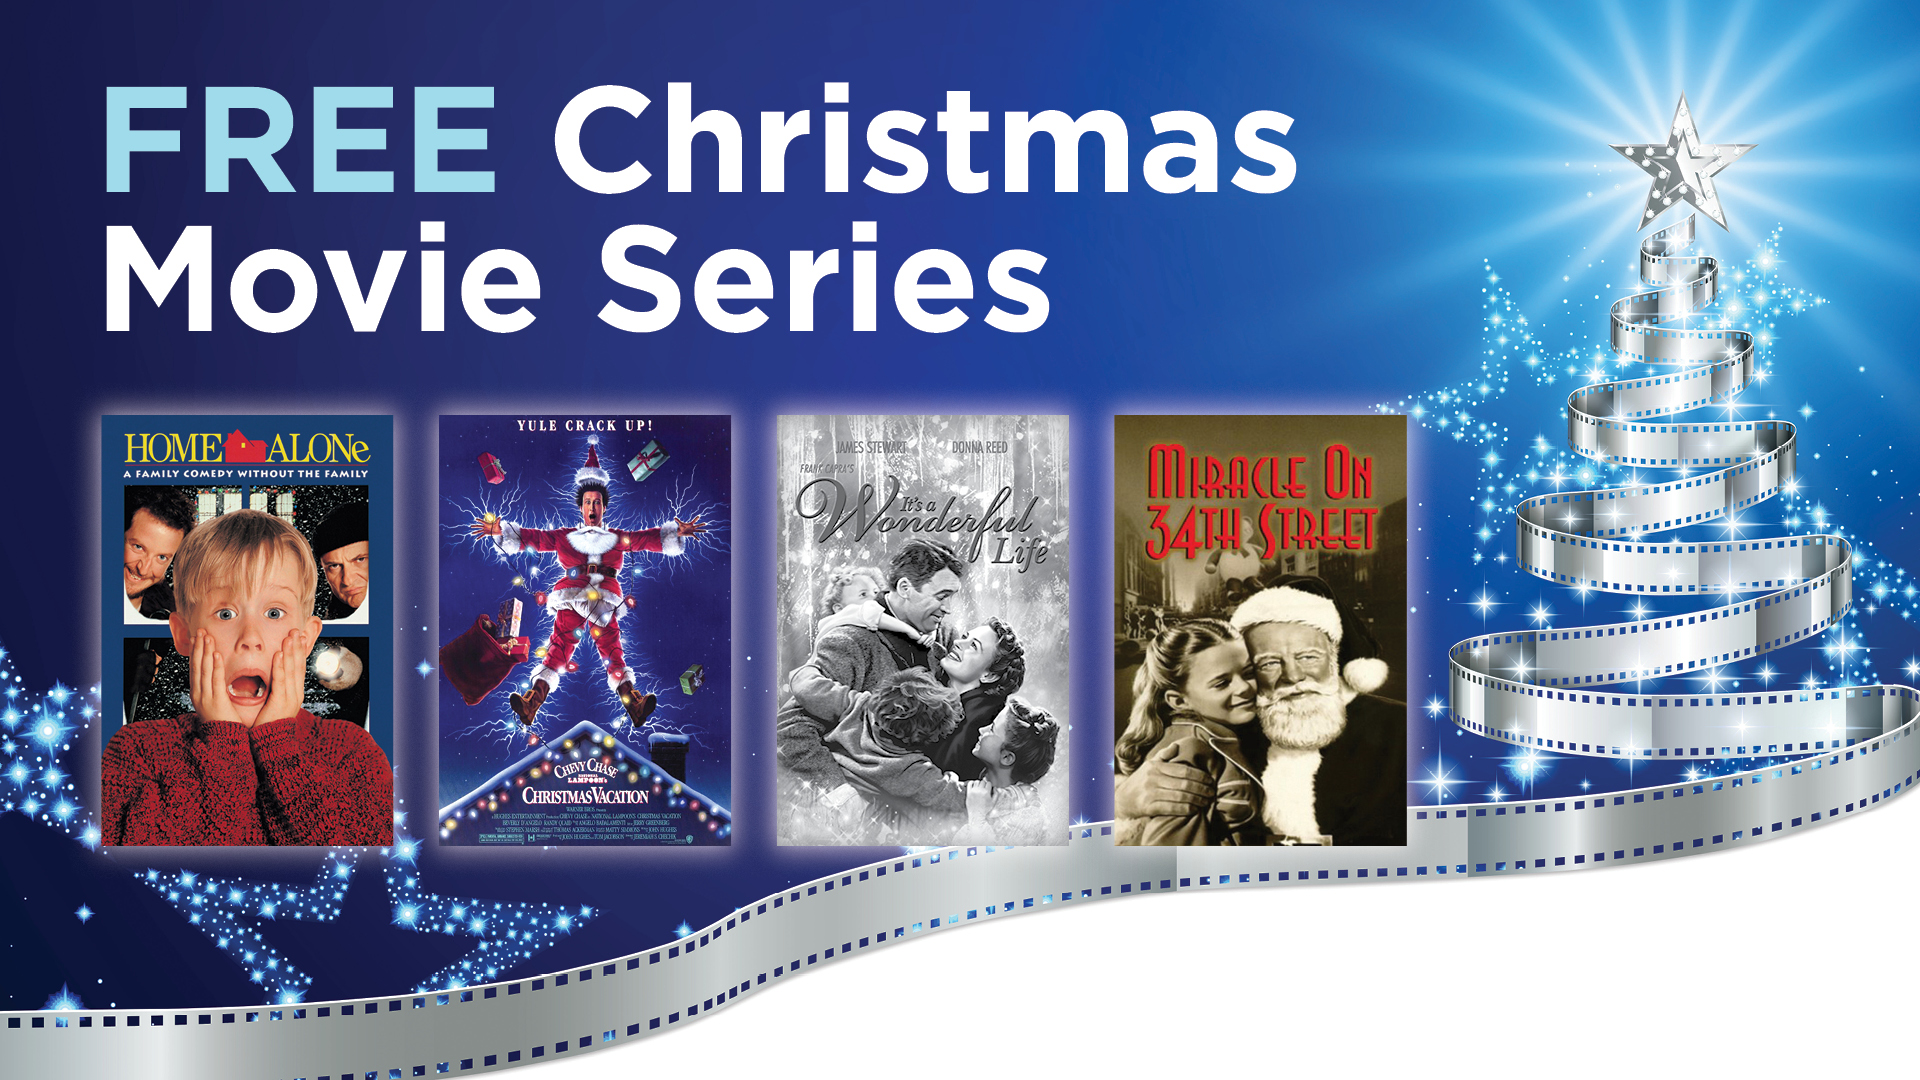 FREE Christmas Movie Series at Schubert's Hartford Theatre